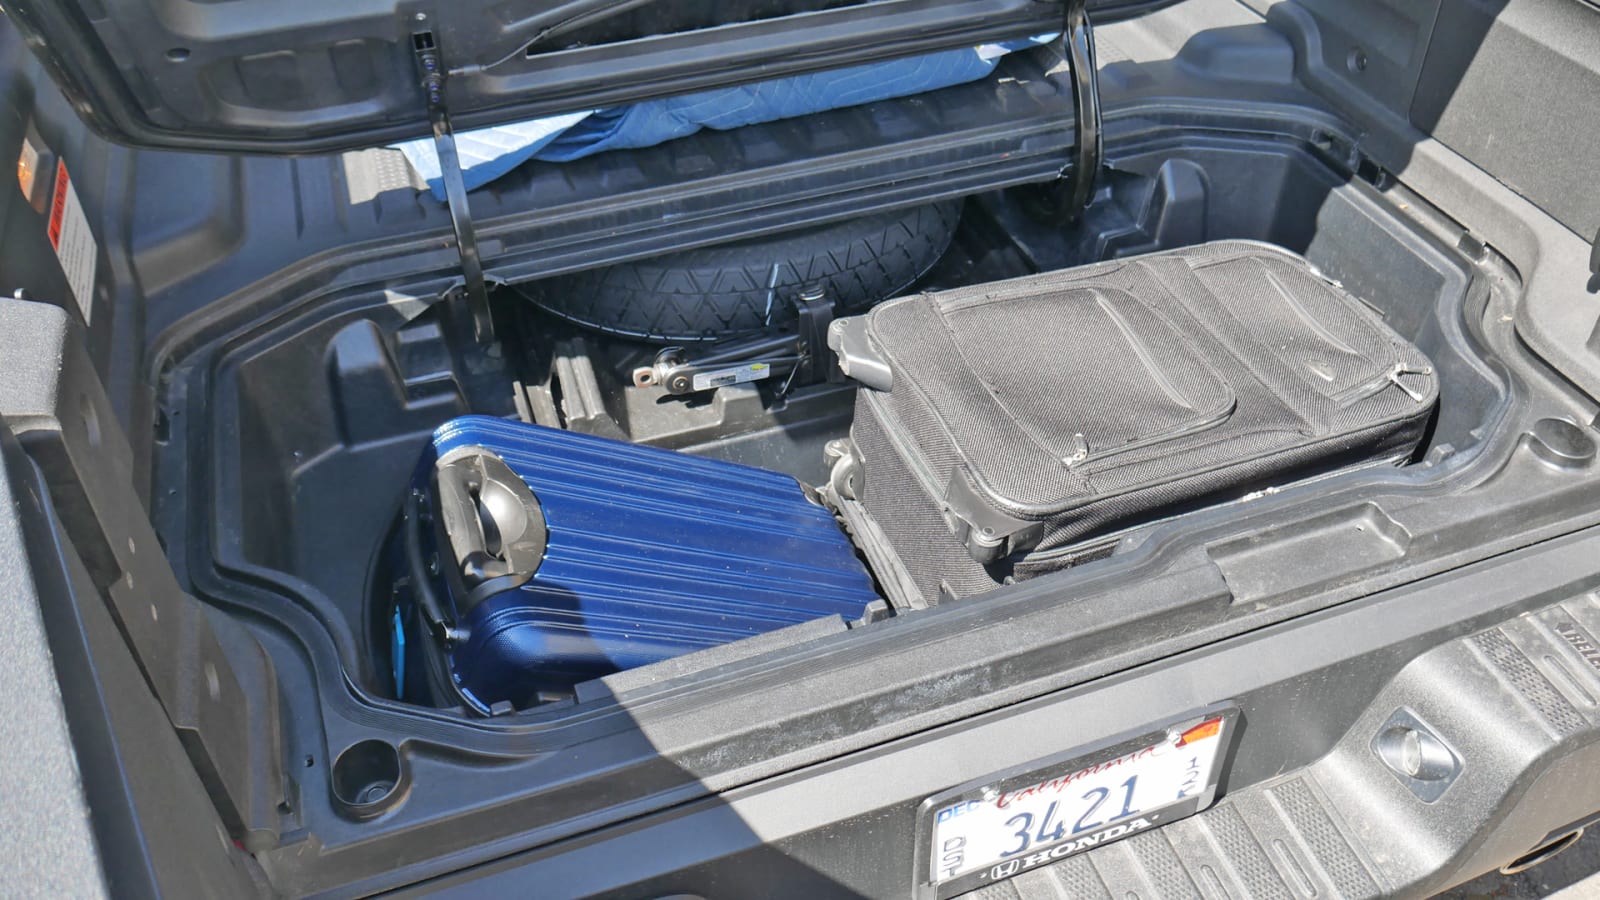 2021 Honda Ridgeline Luggage Test bags in trunk